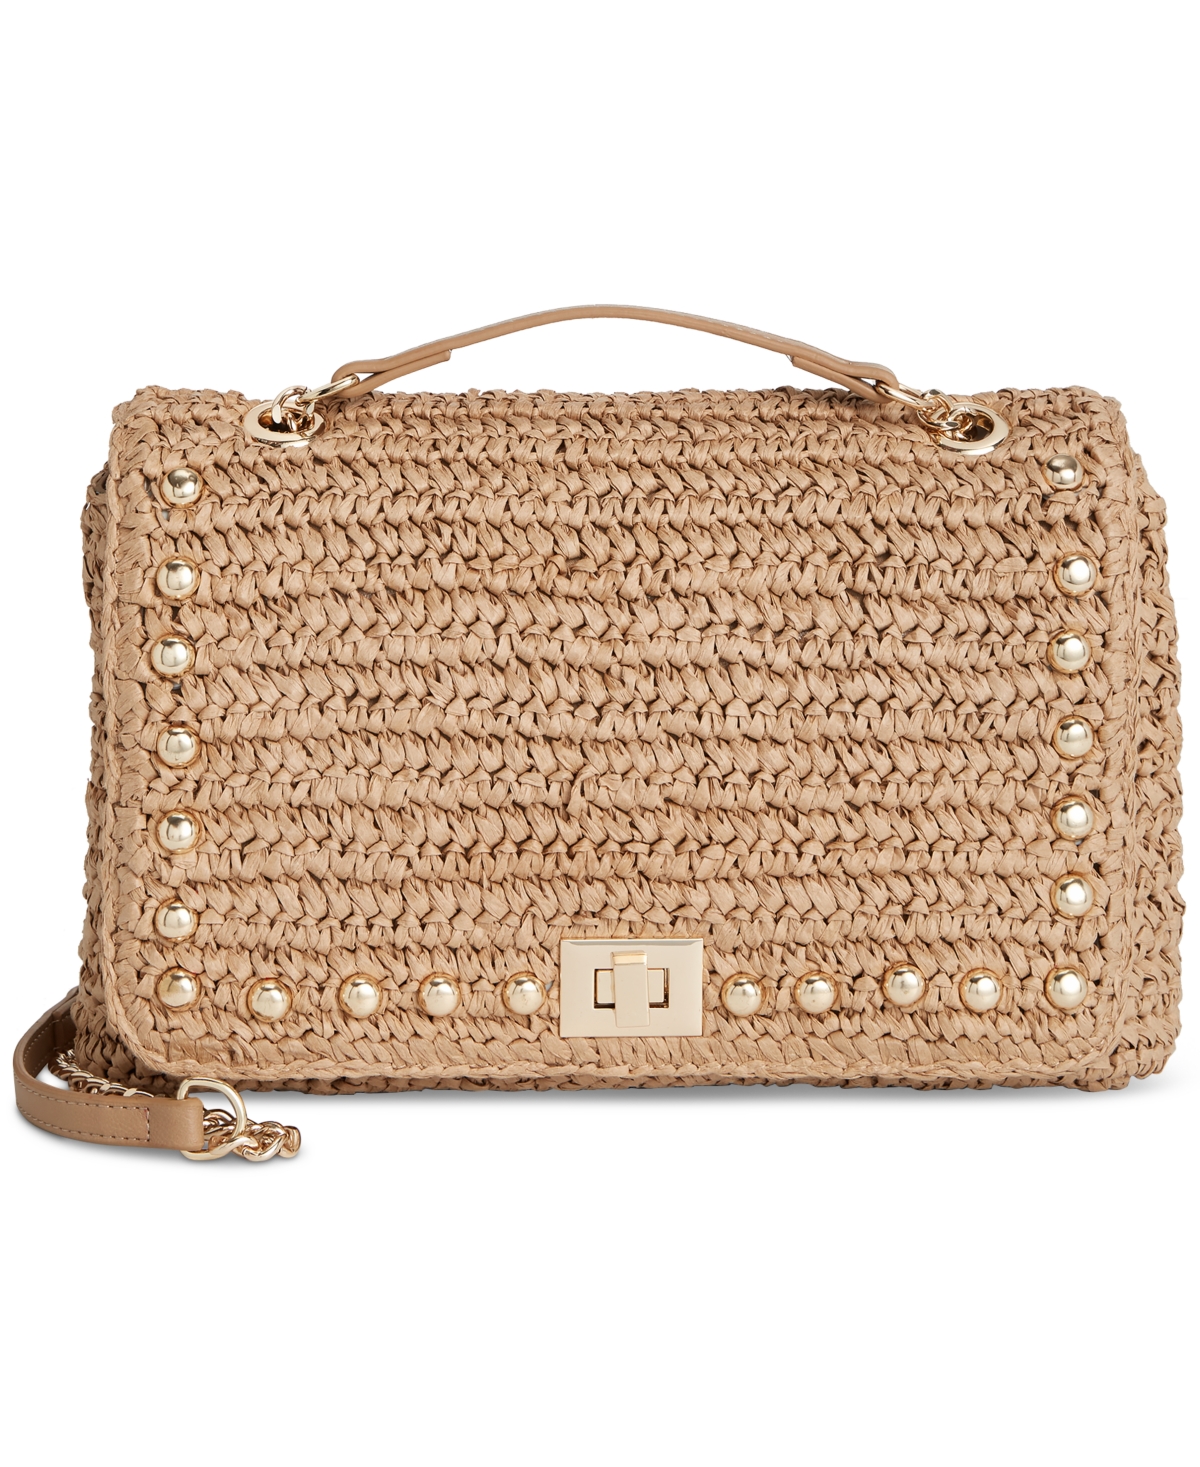 Ajae Soft Crochet Straw Medium Studded Shoulder Bag, Created for Macy's - Straw/pink